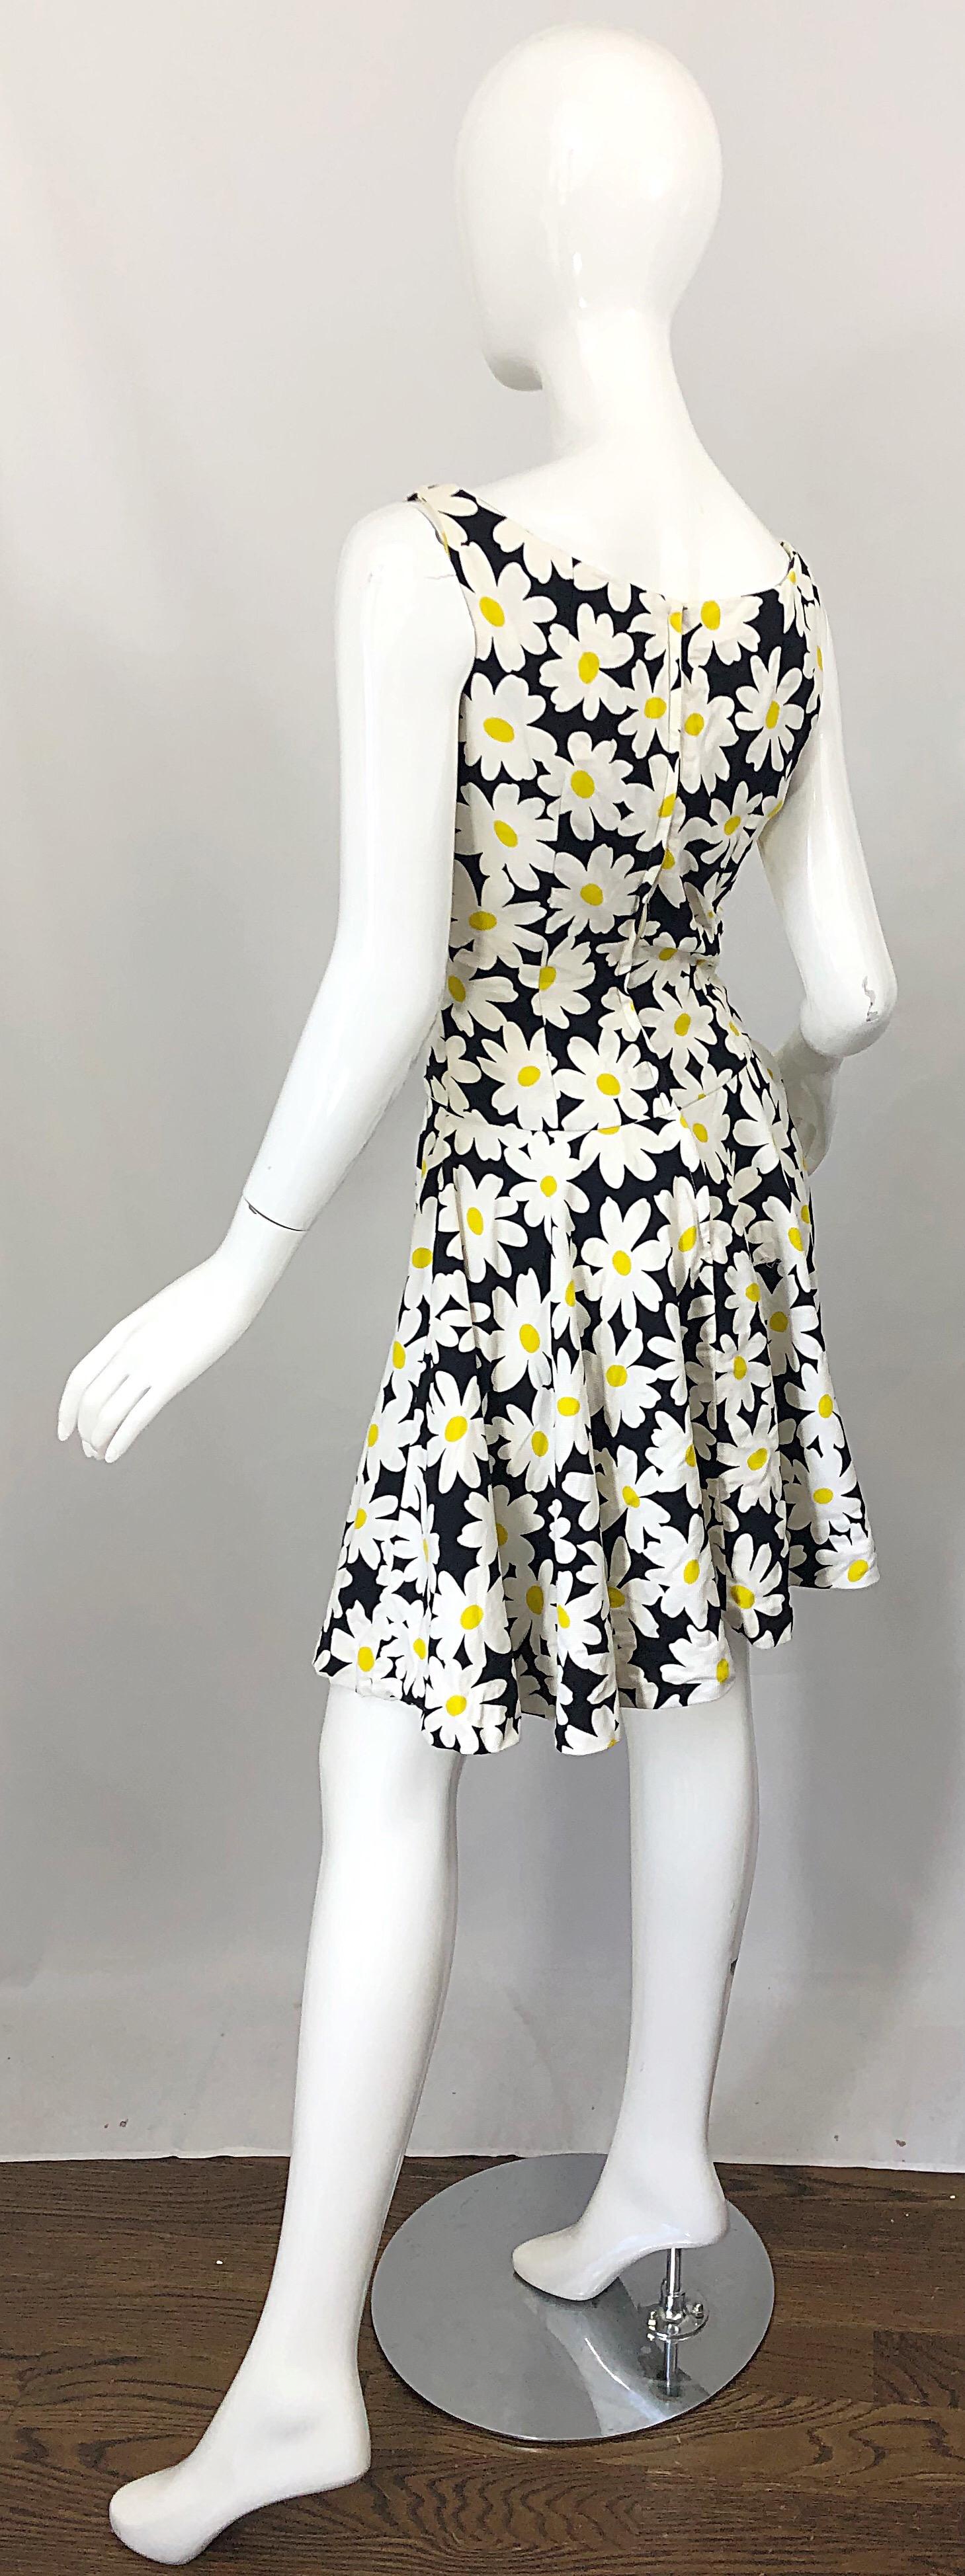 I Magnin 1960s Black and White Daisy Print Pique Cotton Vintage 60s A Line Dress For Sale 3